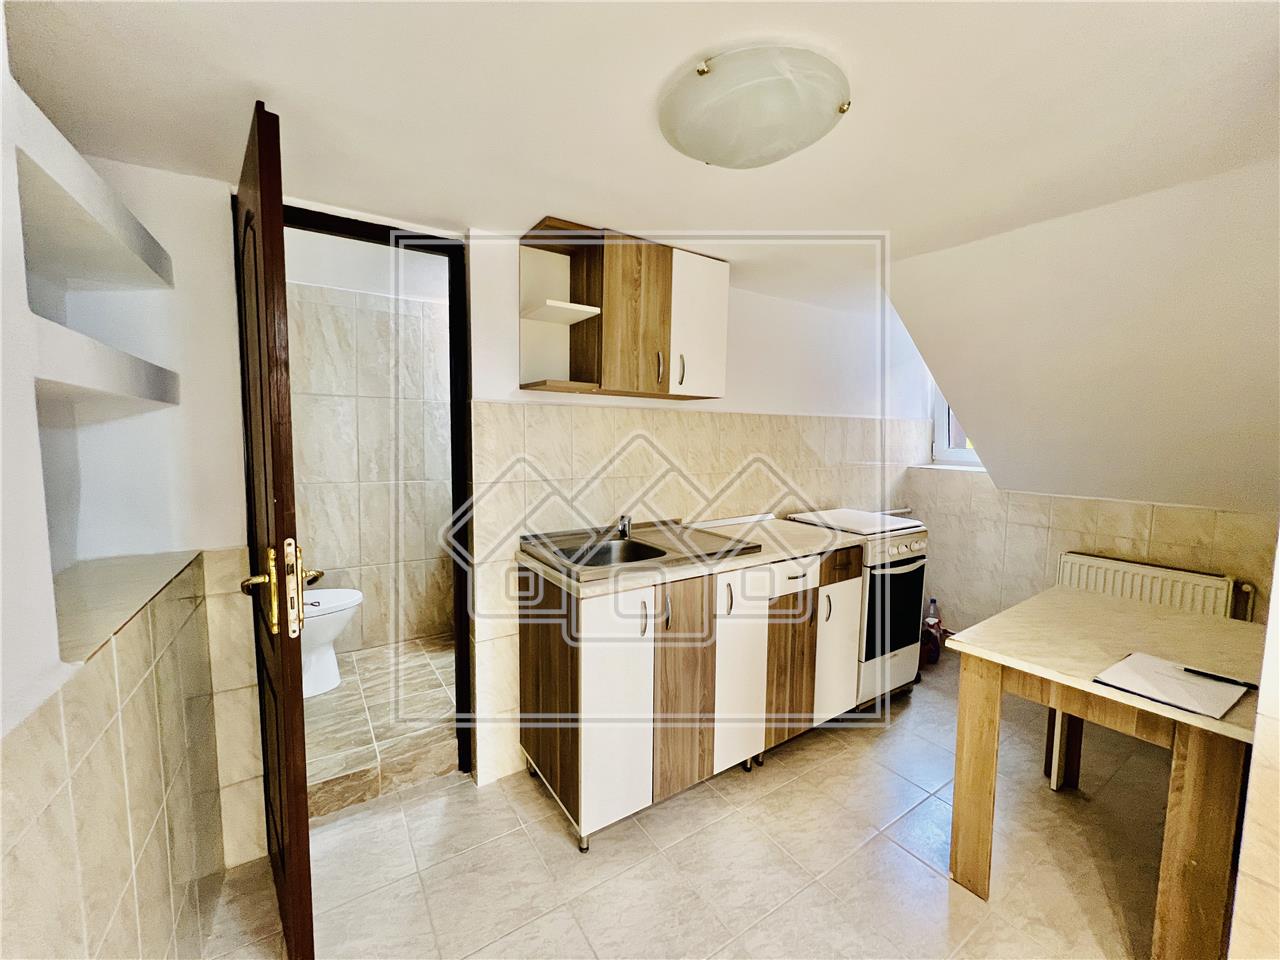 Apartament de vanzare in Sibiu - 2 camere - zona Trei Stejari